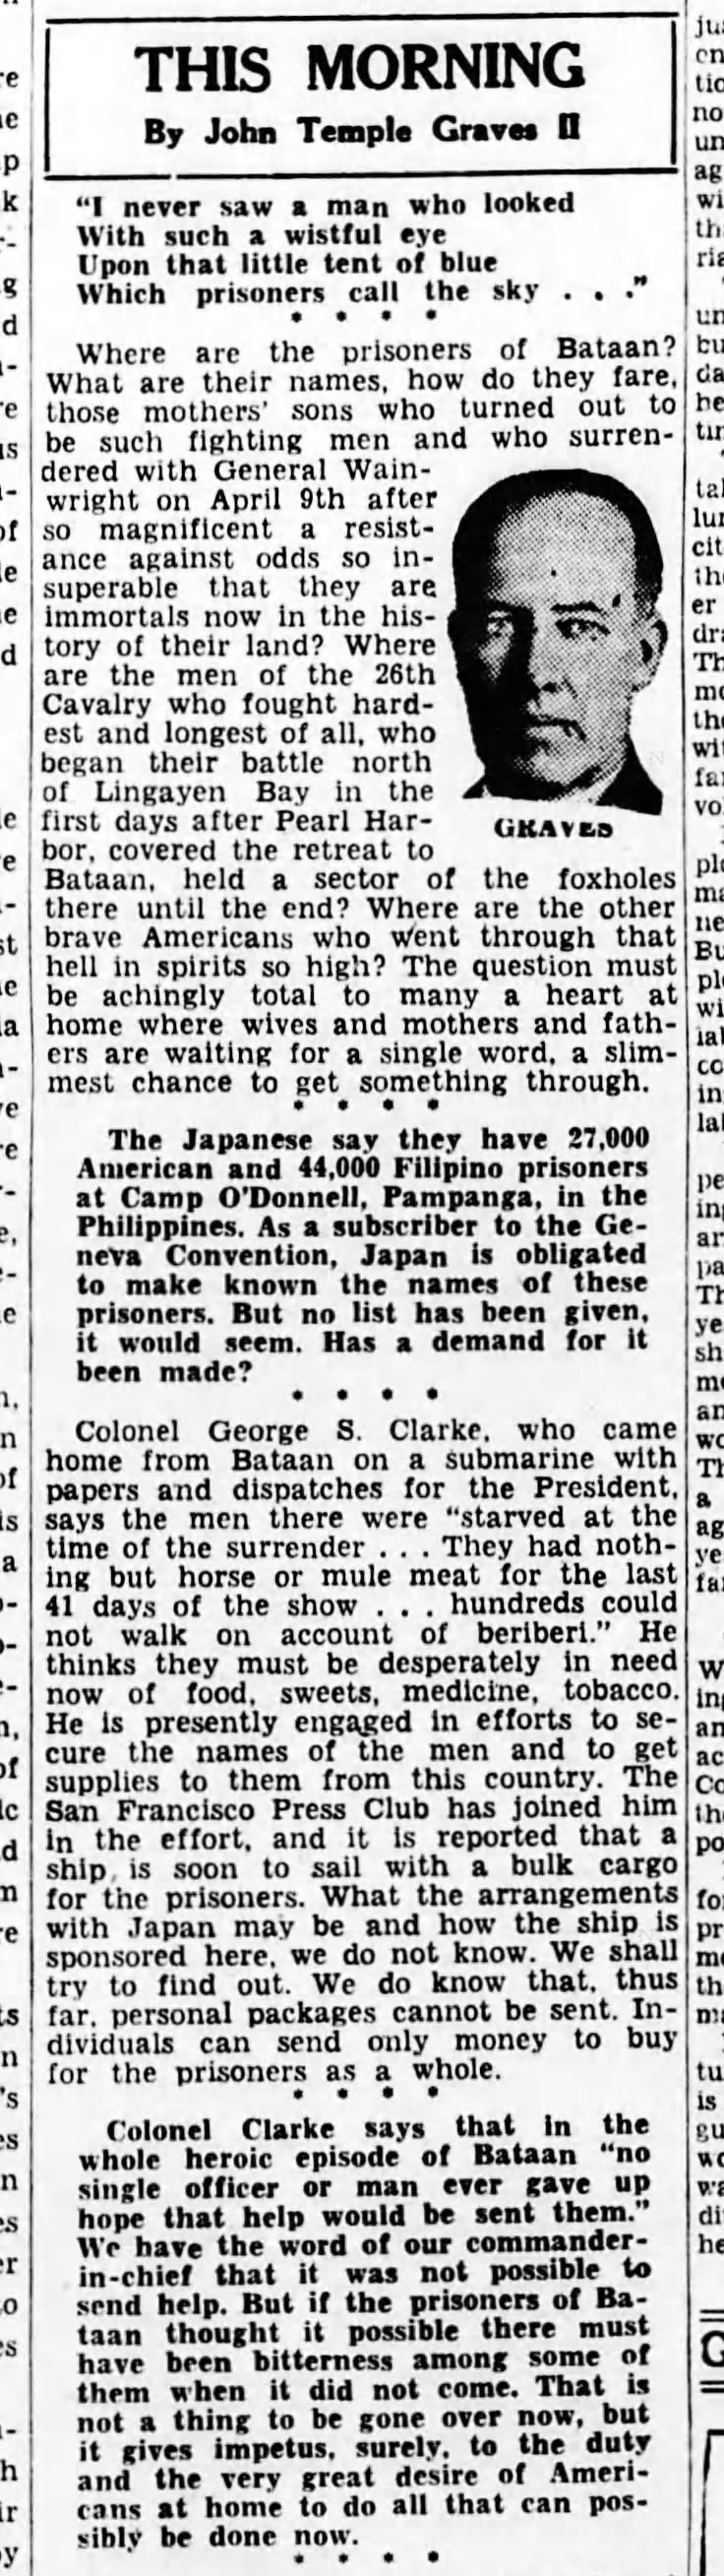 Newspaper columnist wonders "Where are the prisoners of Bataan?" 4 months after American surrender